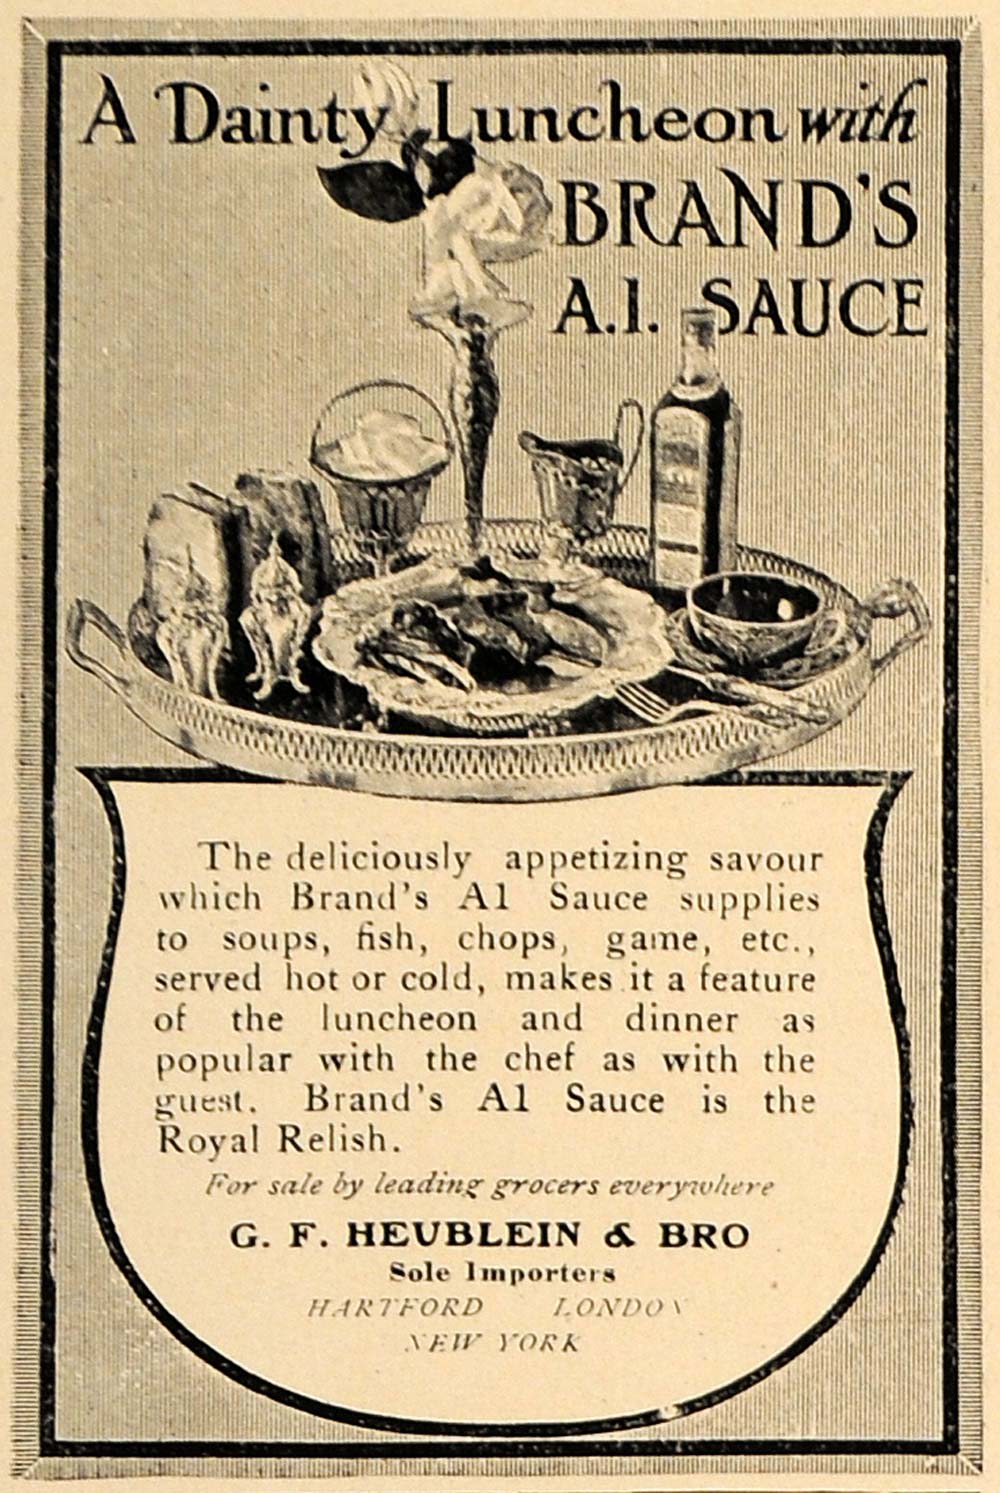 1907 Ad Brand's A1 Sauce G.F. Heublein Dainty Luncheon - ORIGINAL CL9